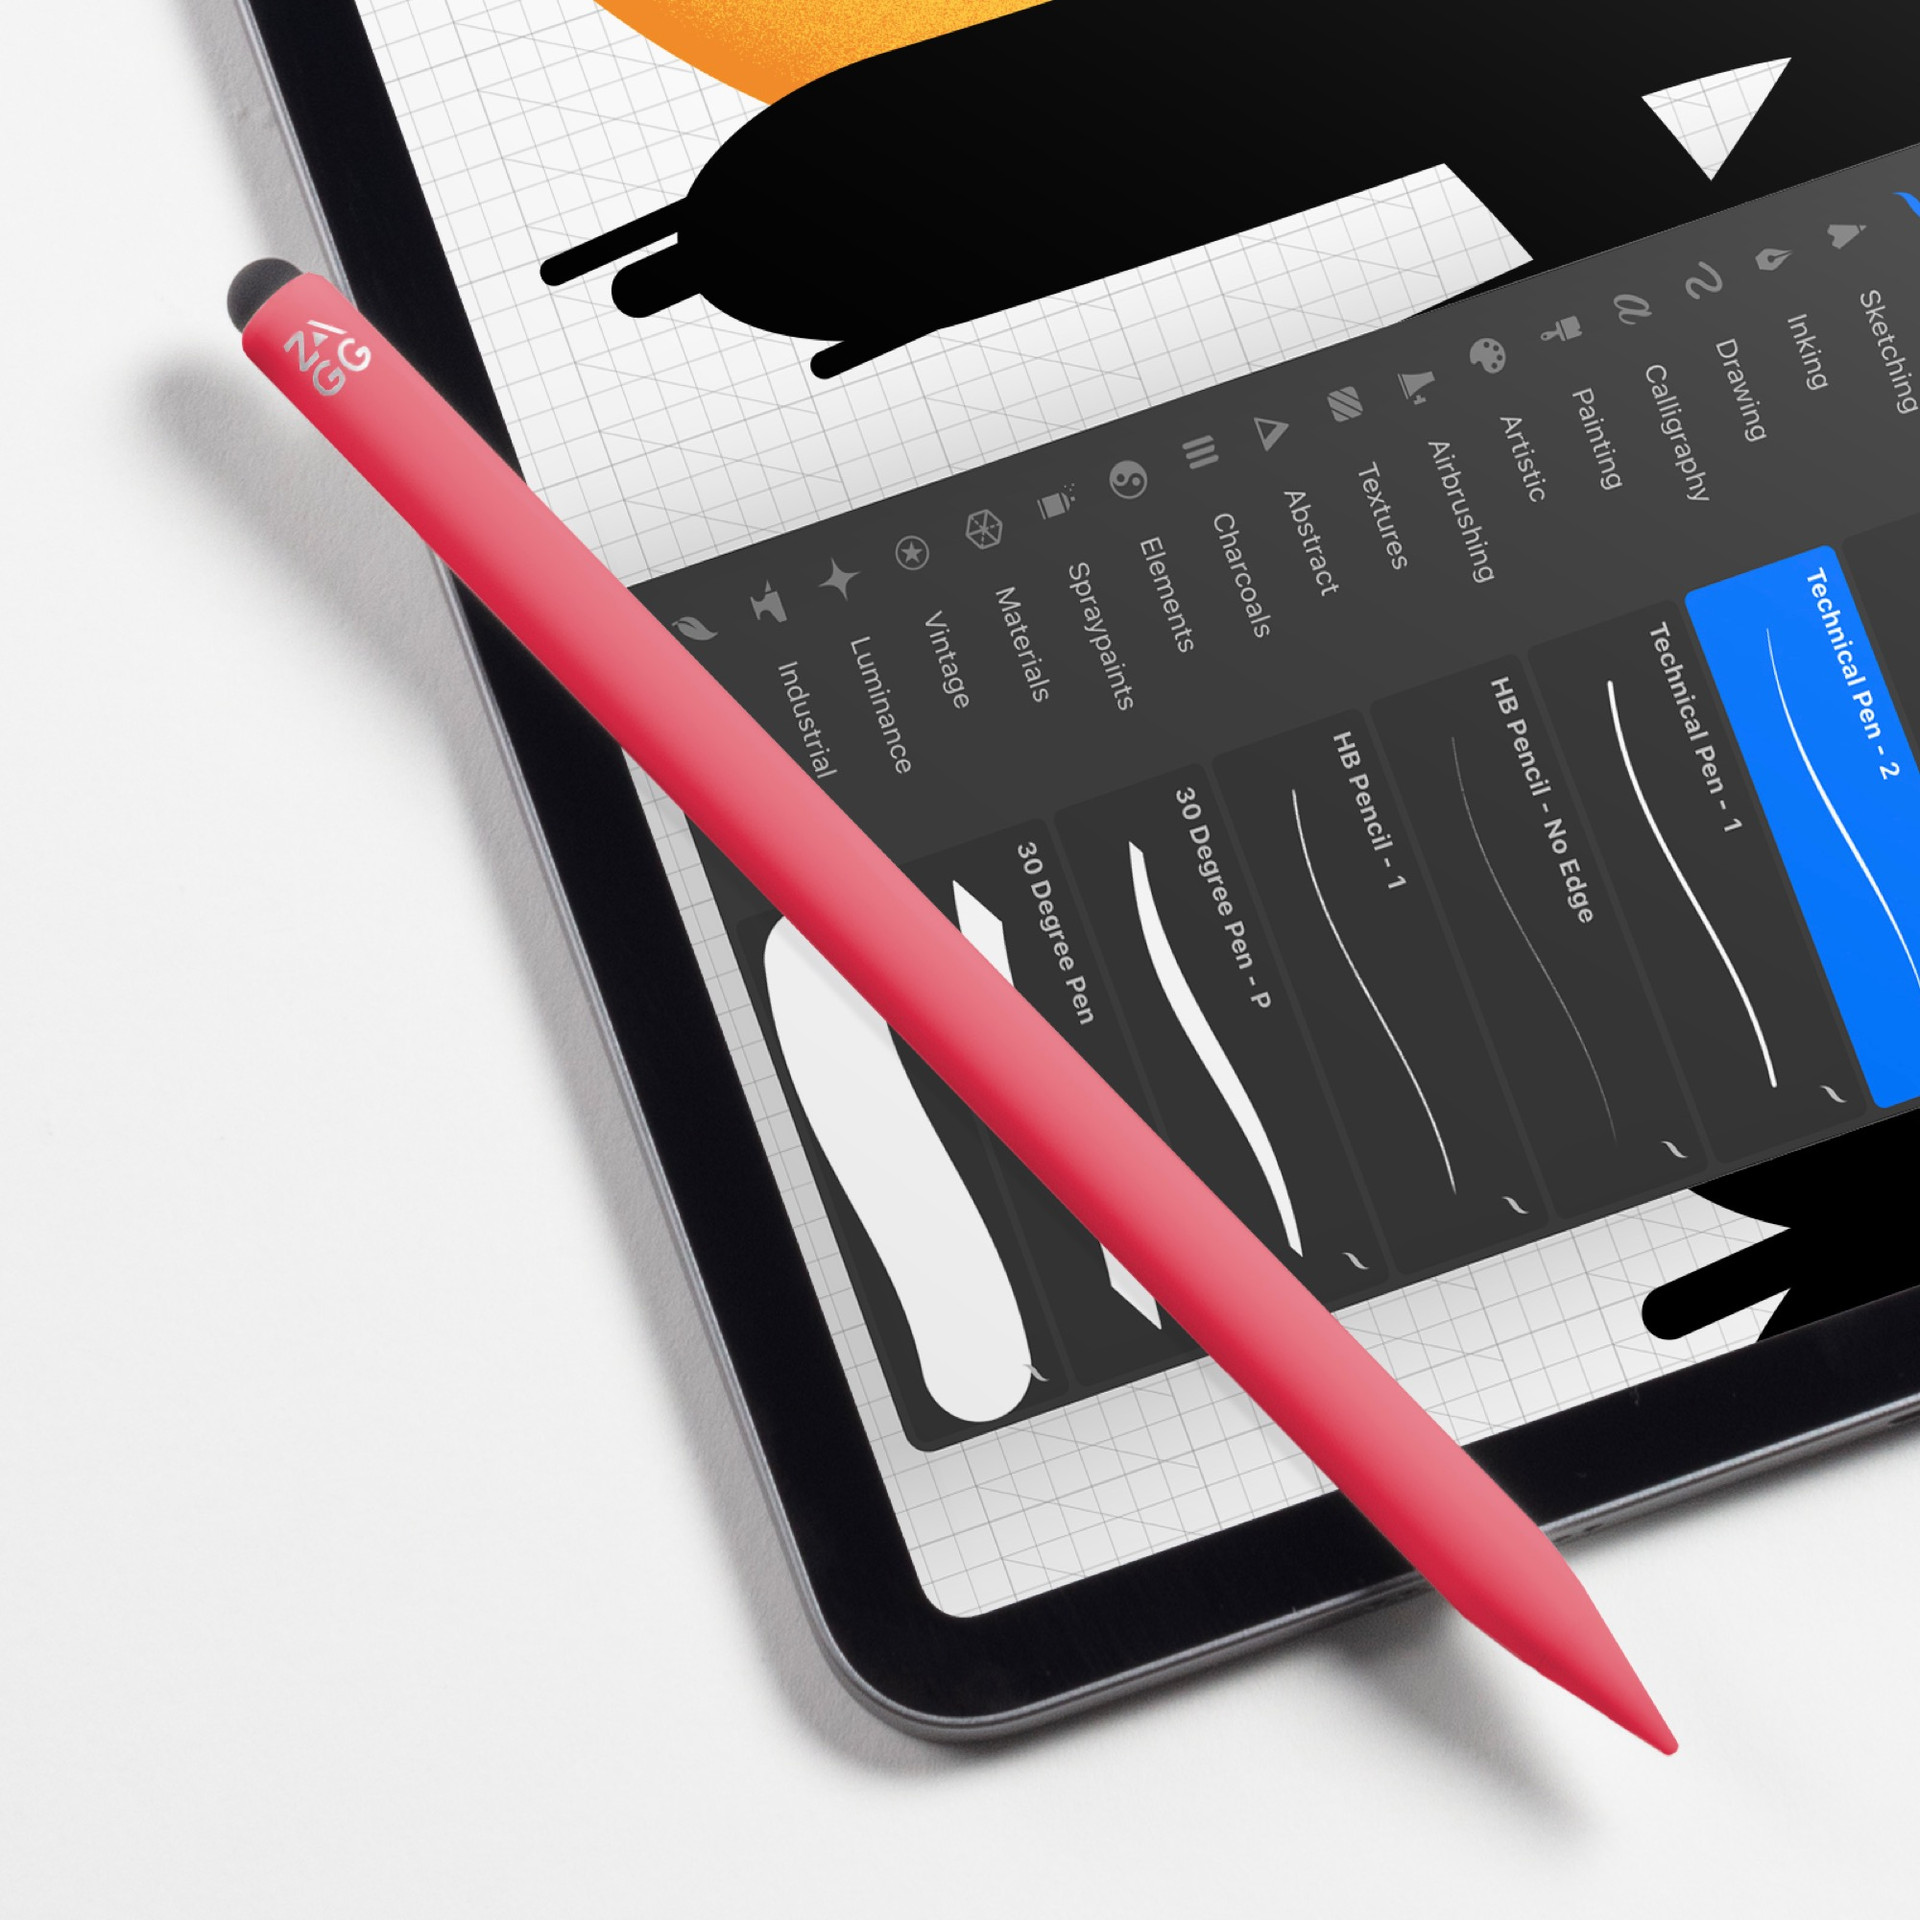 ZAGG Announces Pro Stylus 2: A Cutting-Edge Stylus to Enhance iPad Productivity